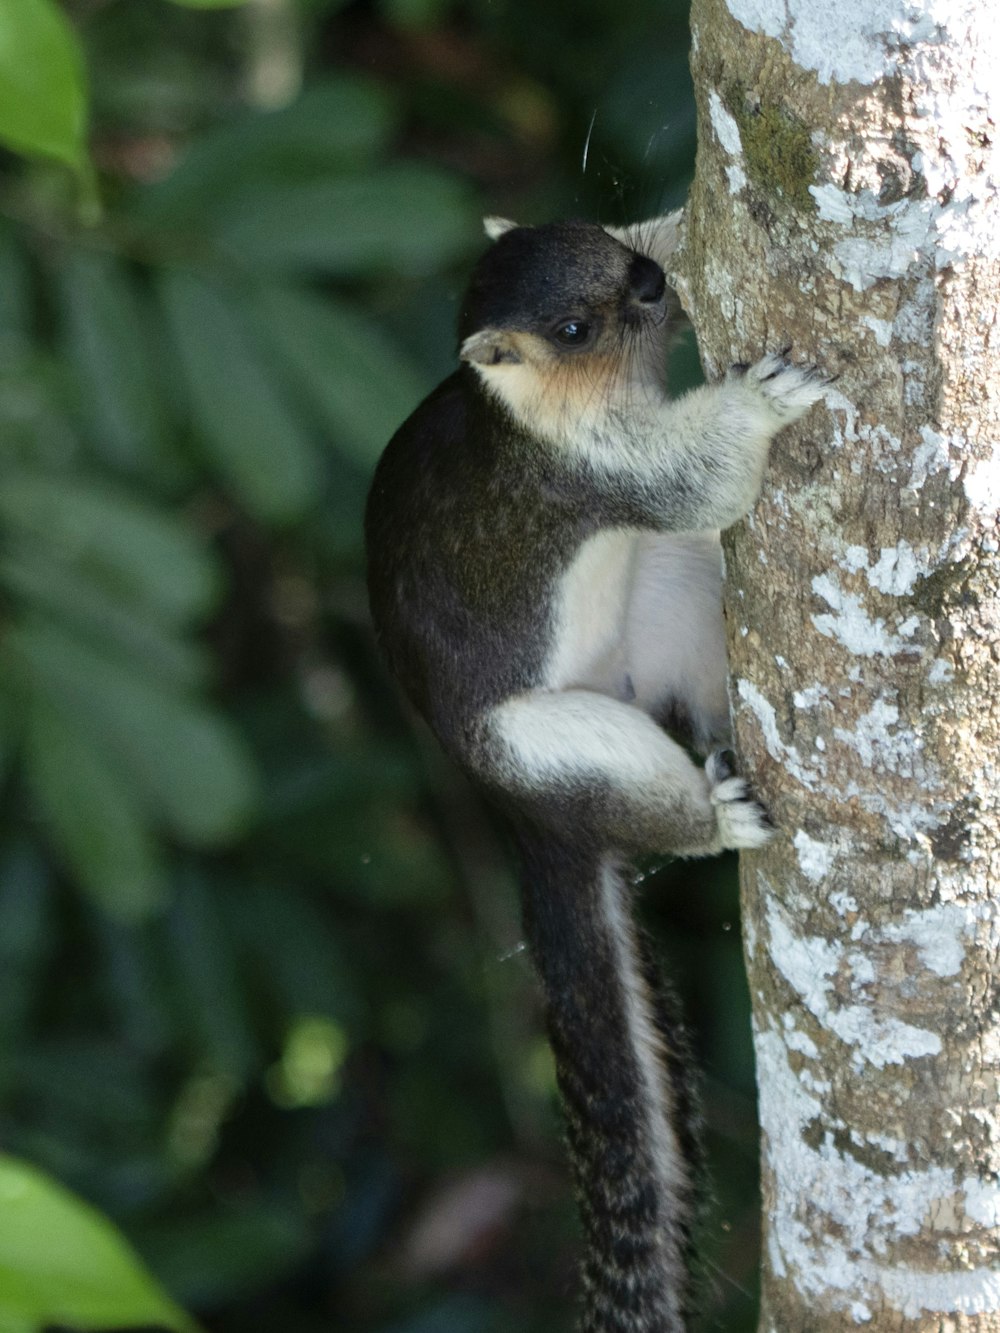 a black and white monkey climbing up a tree